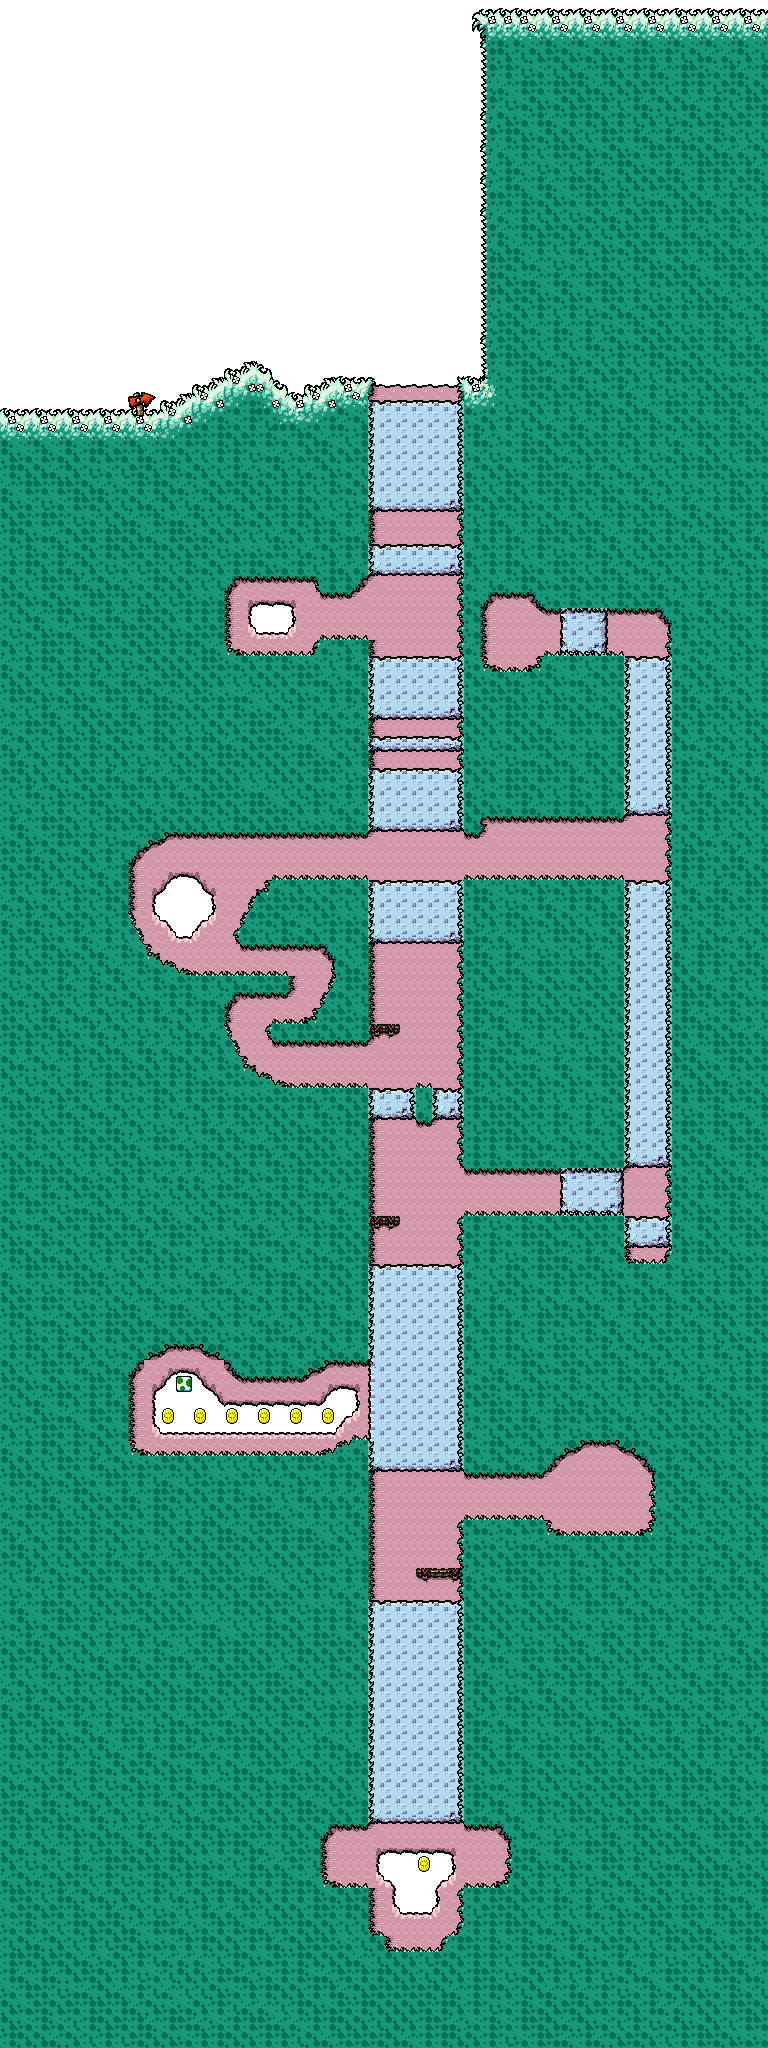 Super Mario World 2: Yoshi's Island - 2-6: The Cave Of The Mystery Maze (1/5)